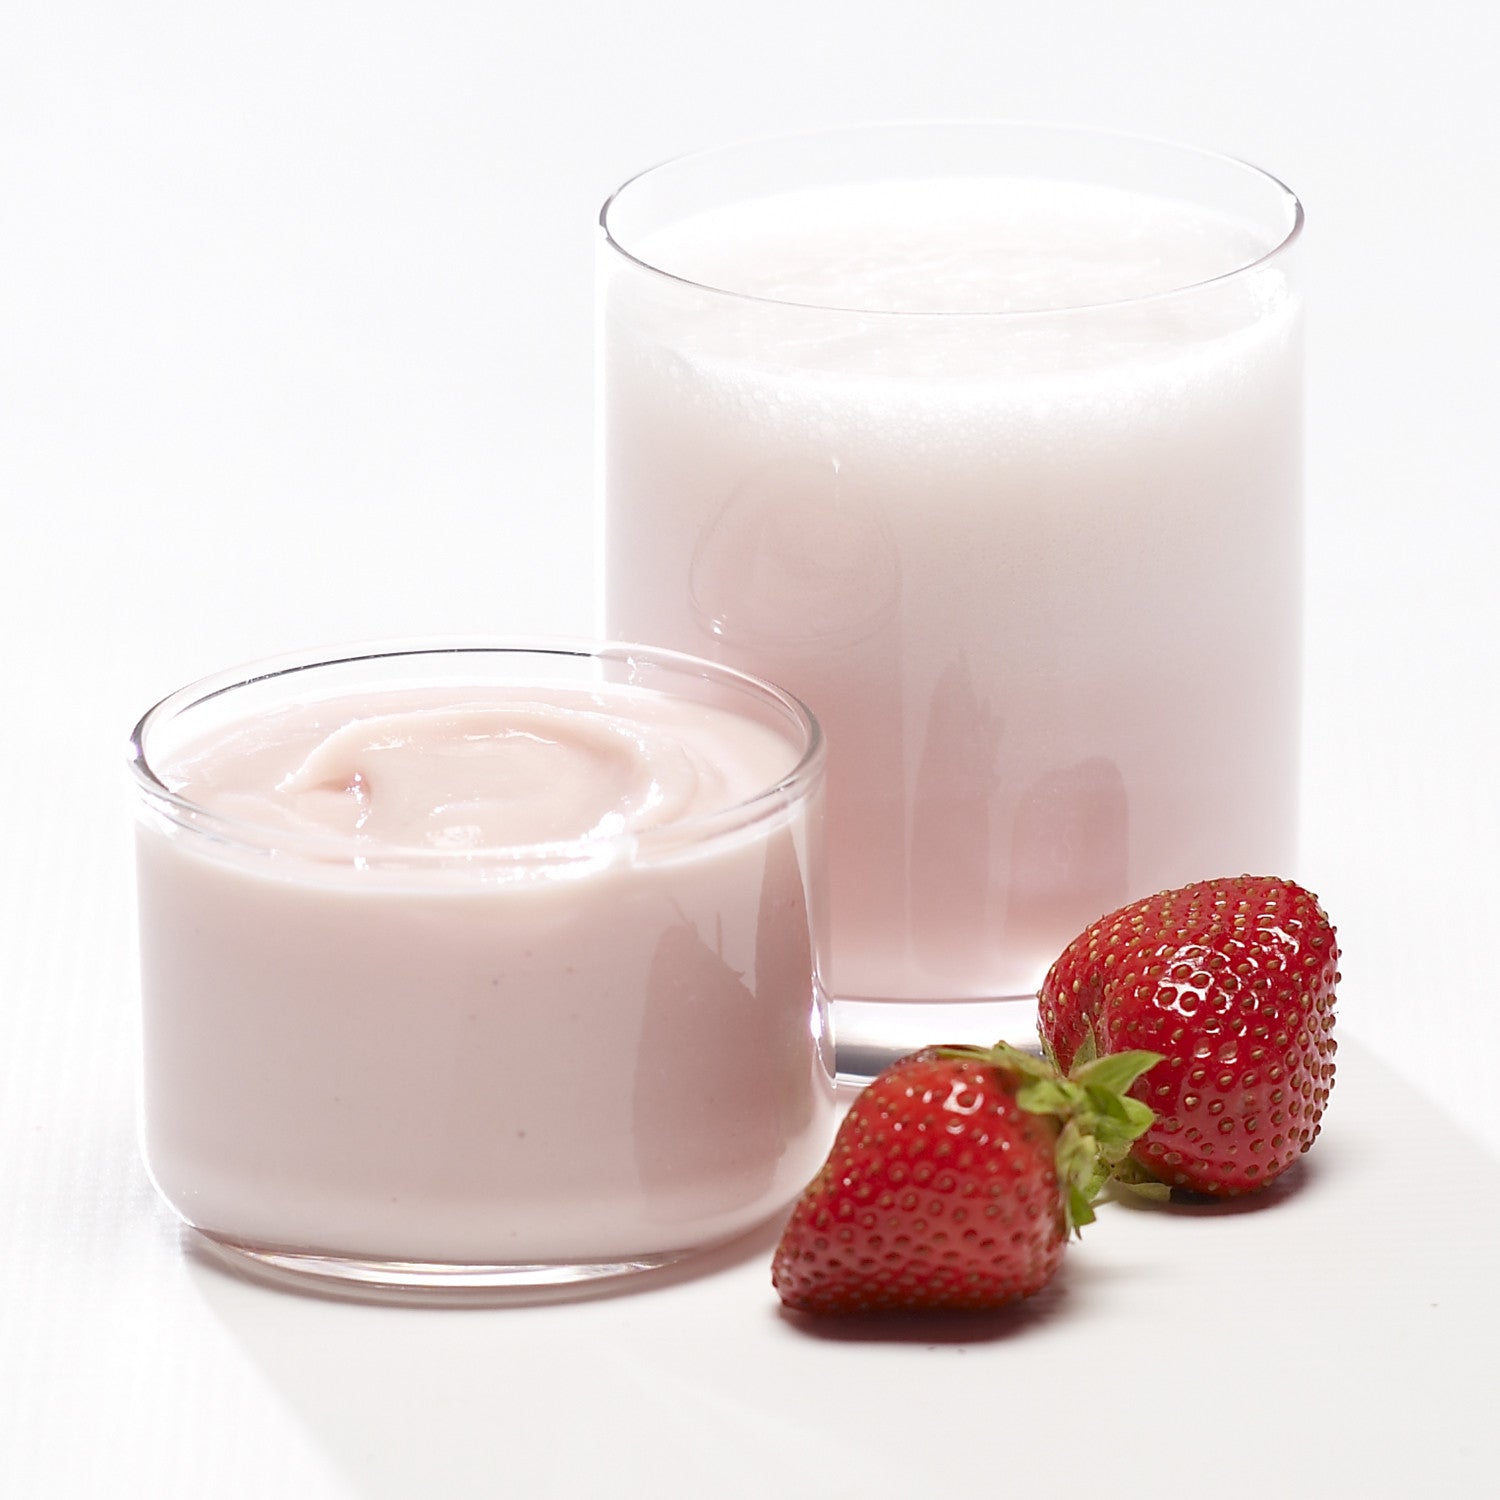 Proti Strawberry Shake or Pudding